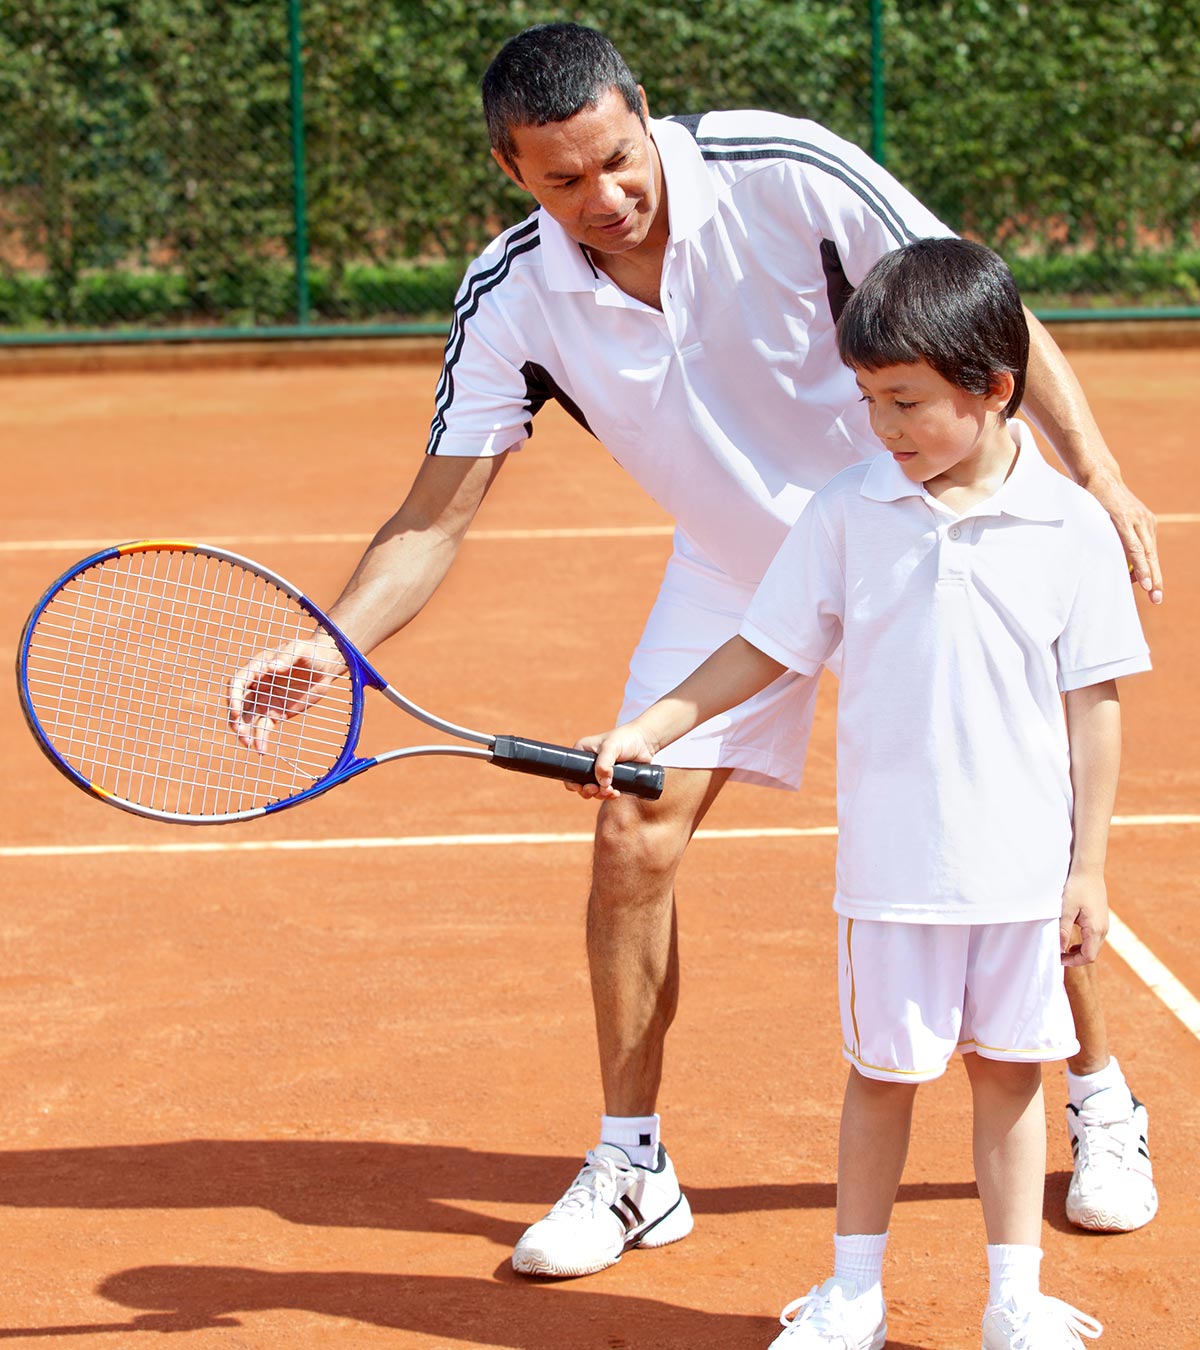 A kid playing tennis